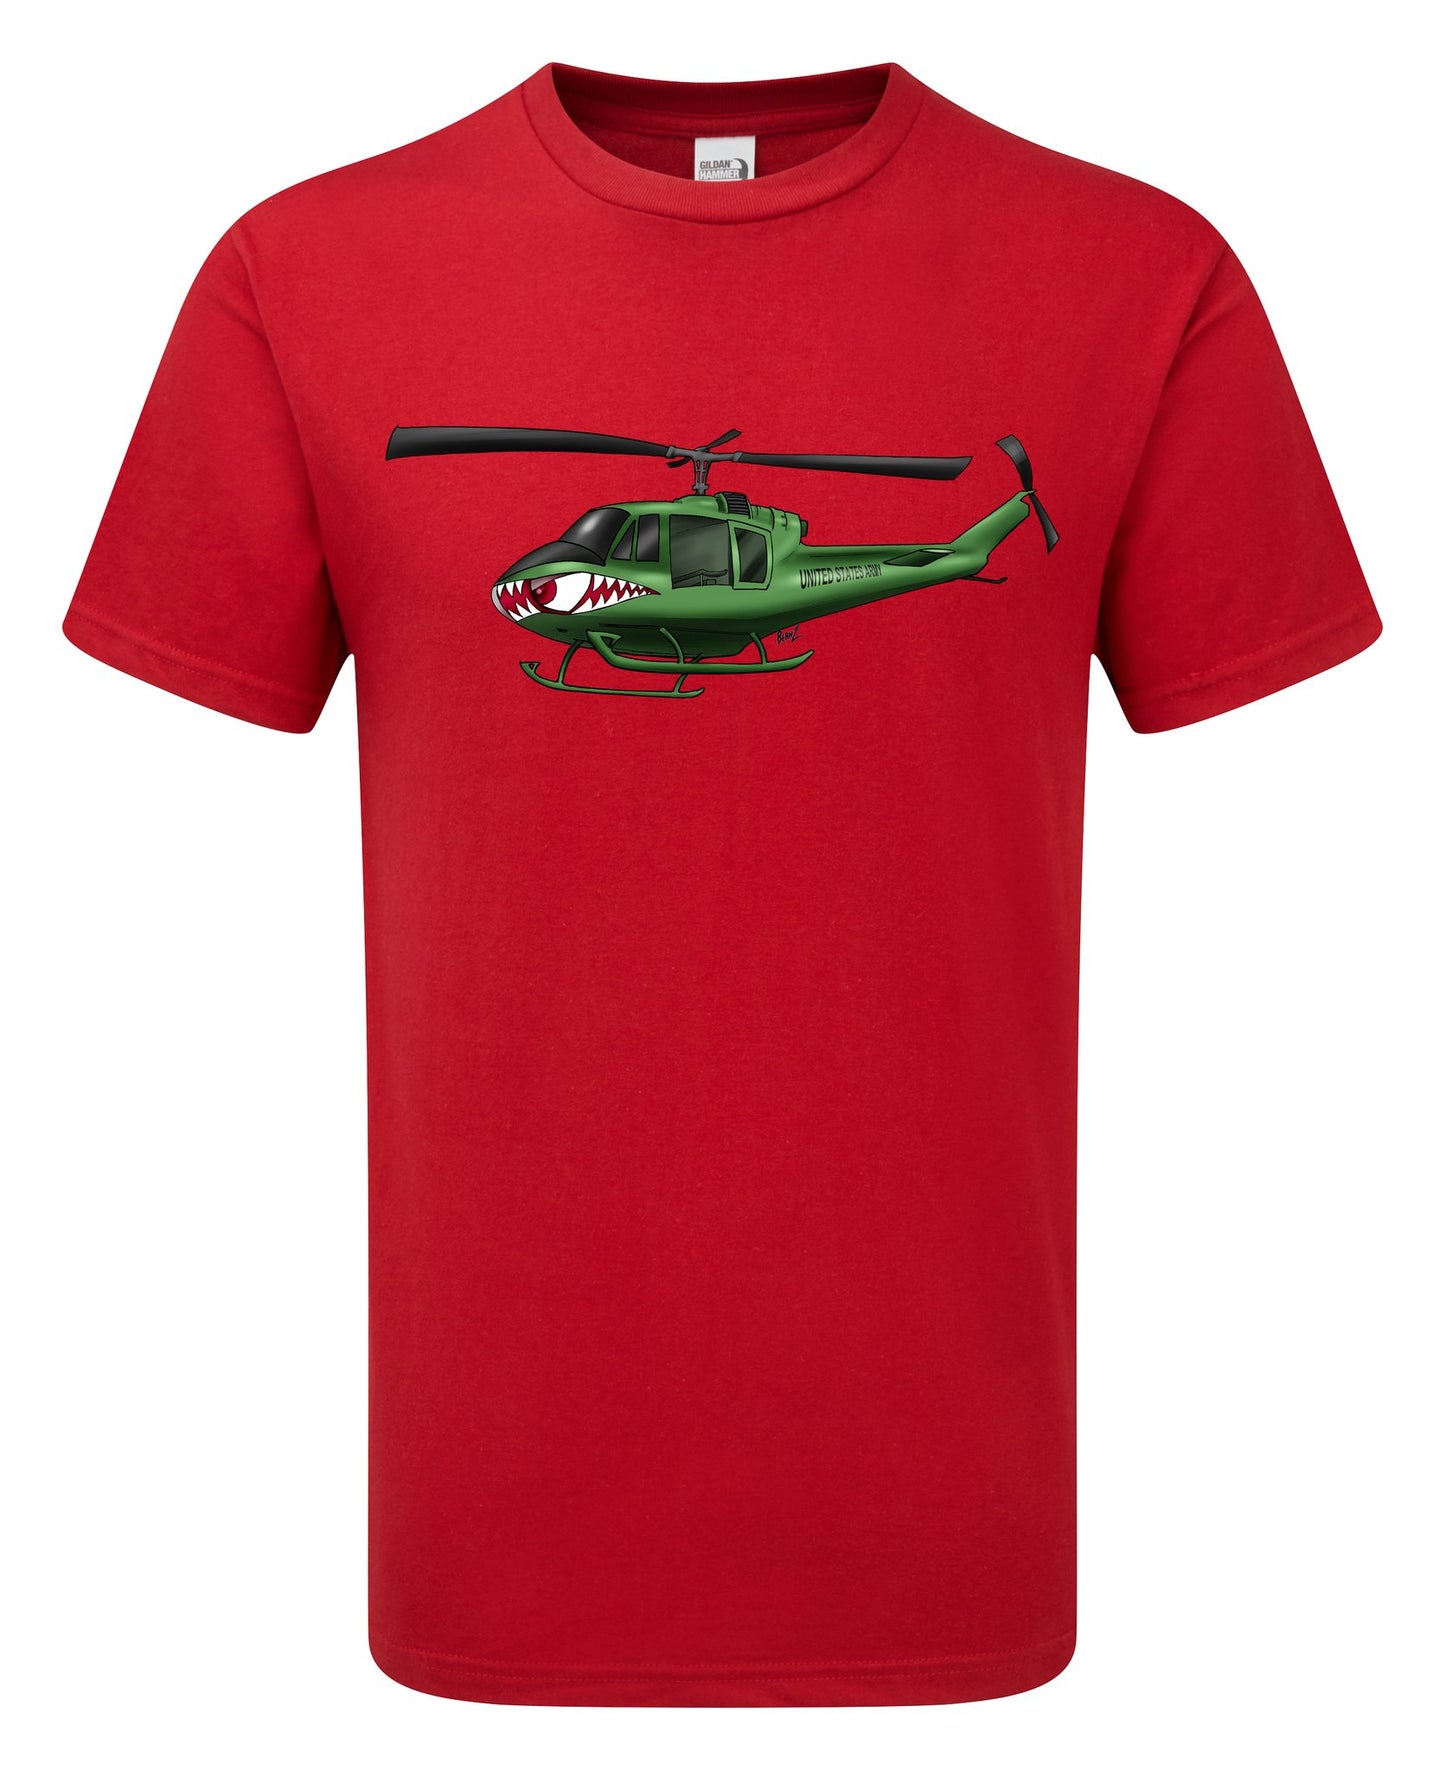 Huey Helicopter Cartoon T-Shirt